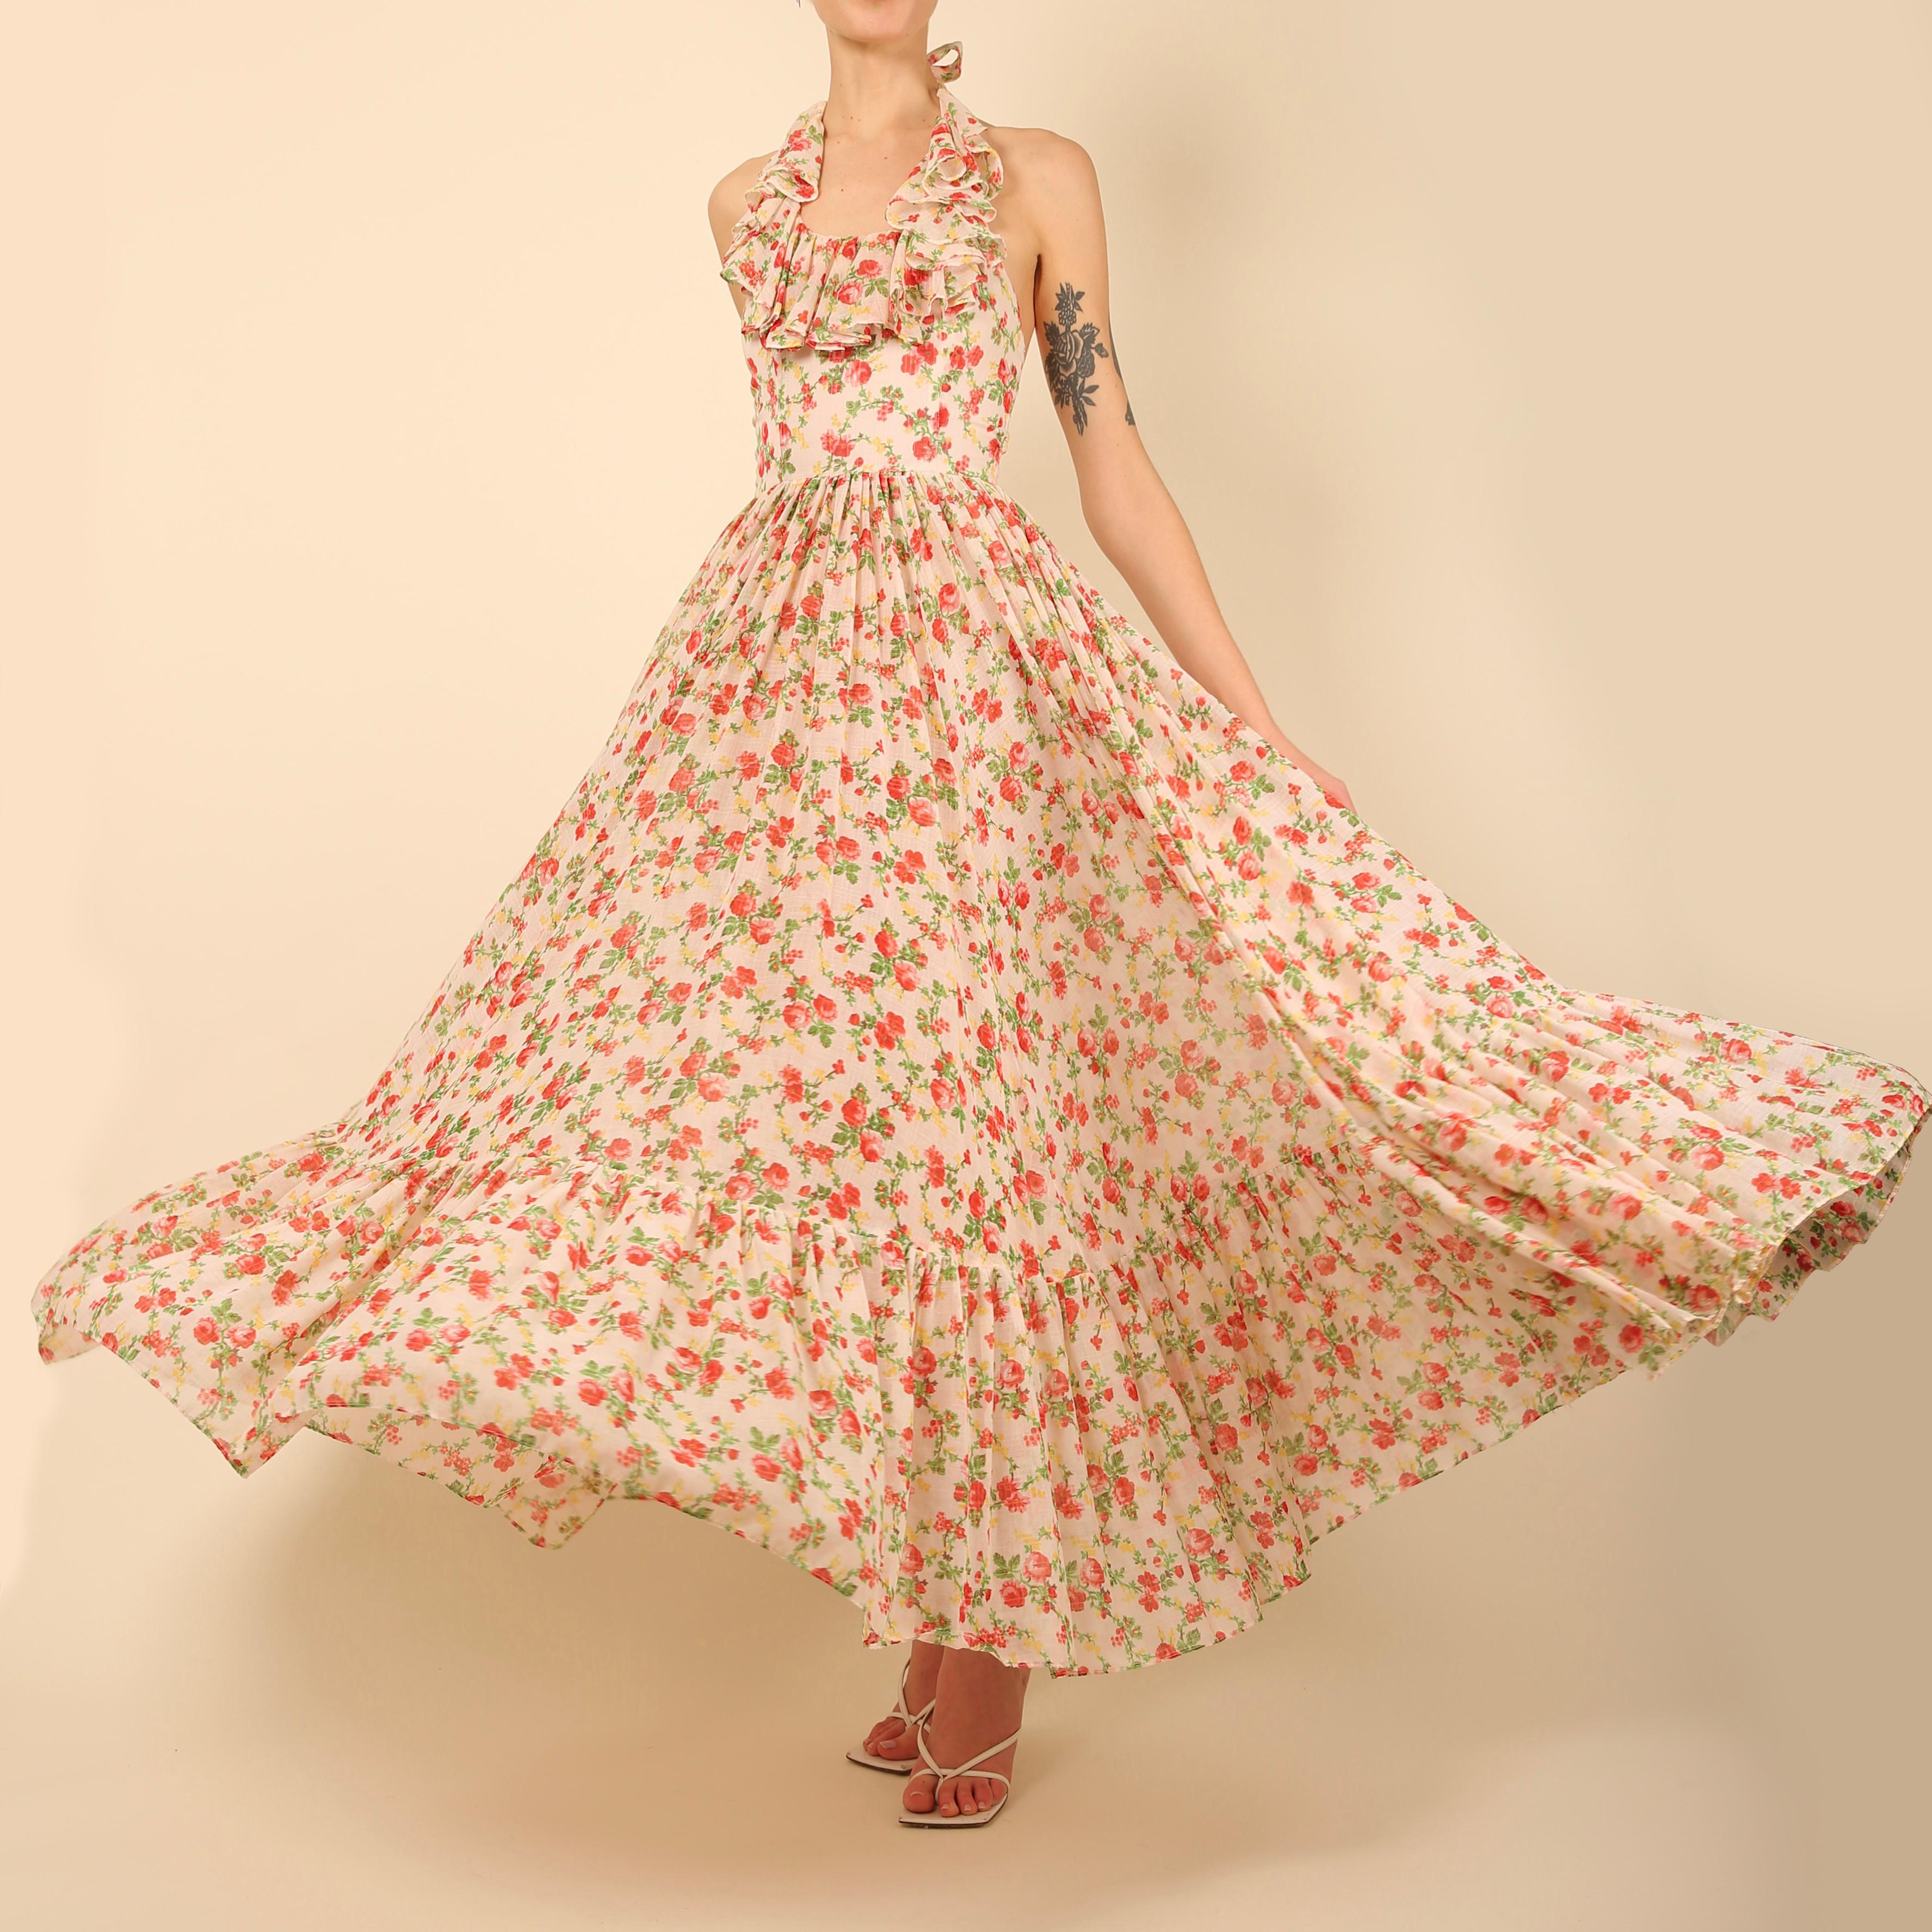 Vintage cottagecore prairie cotton white red floral print halter backless dress 1